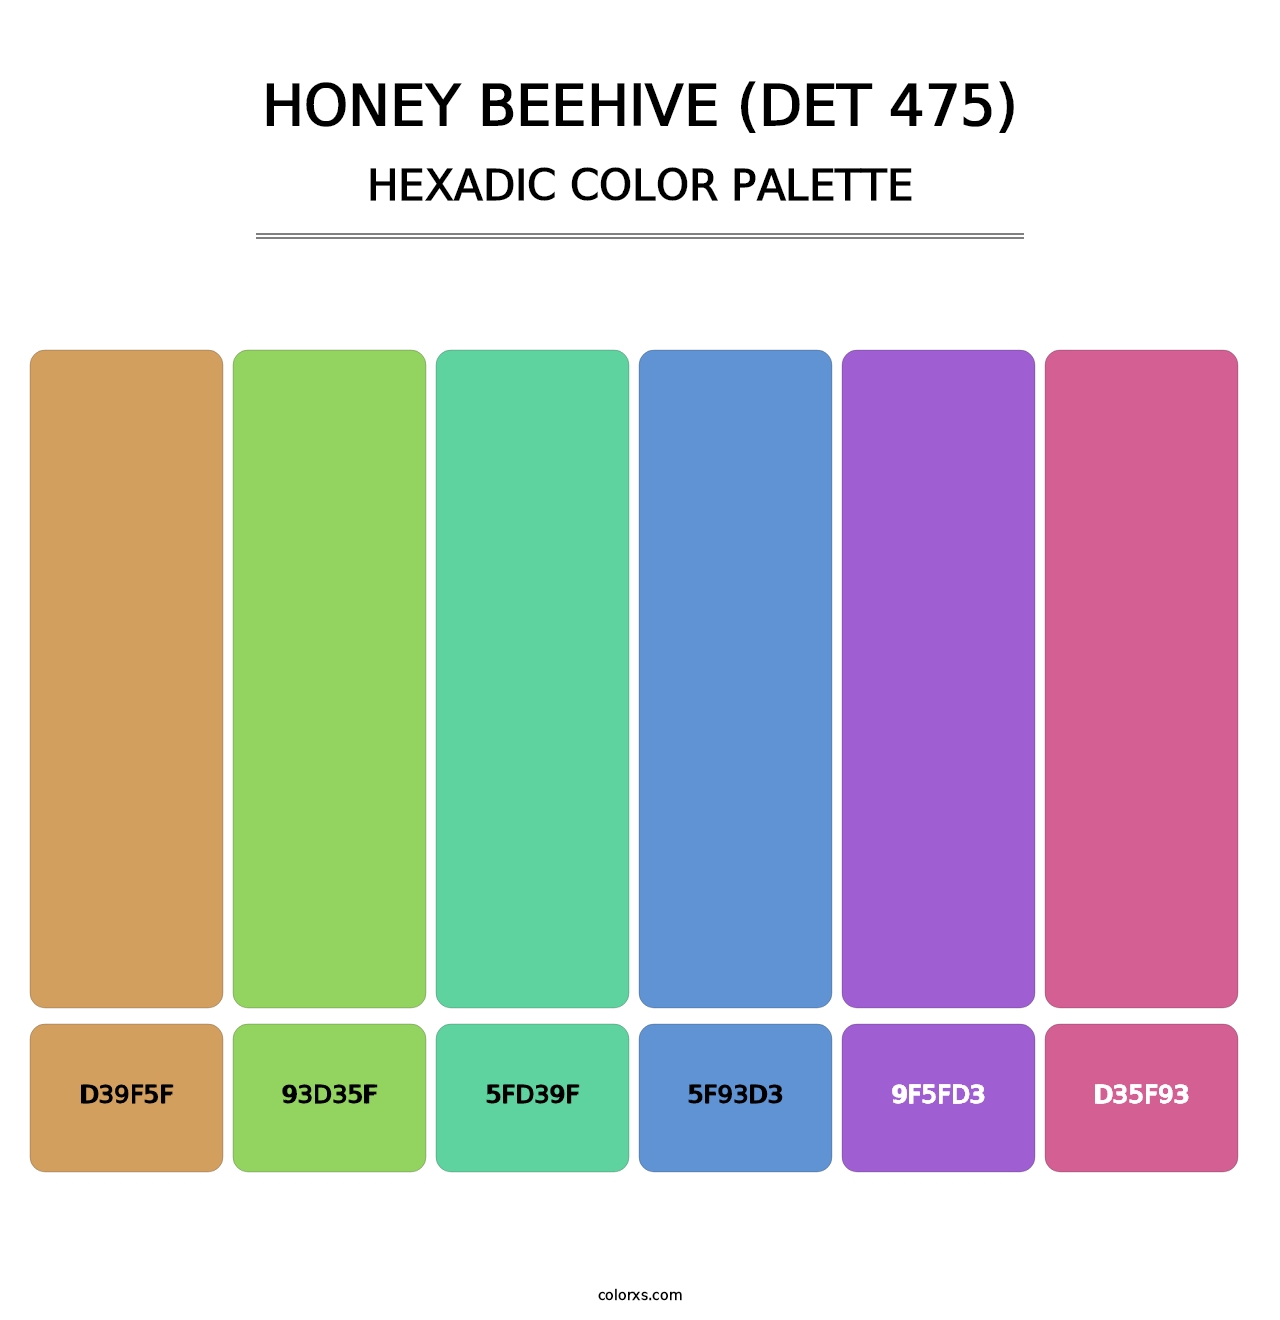 Honey Beehive (DET 475) - Hexadic Color Palette